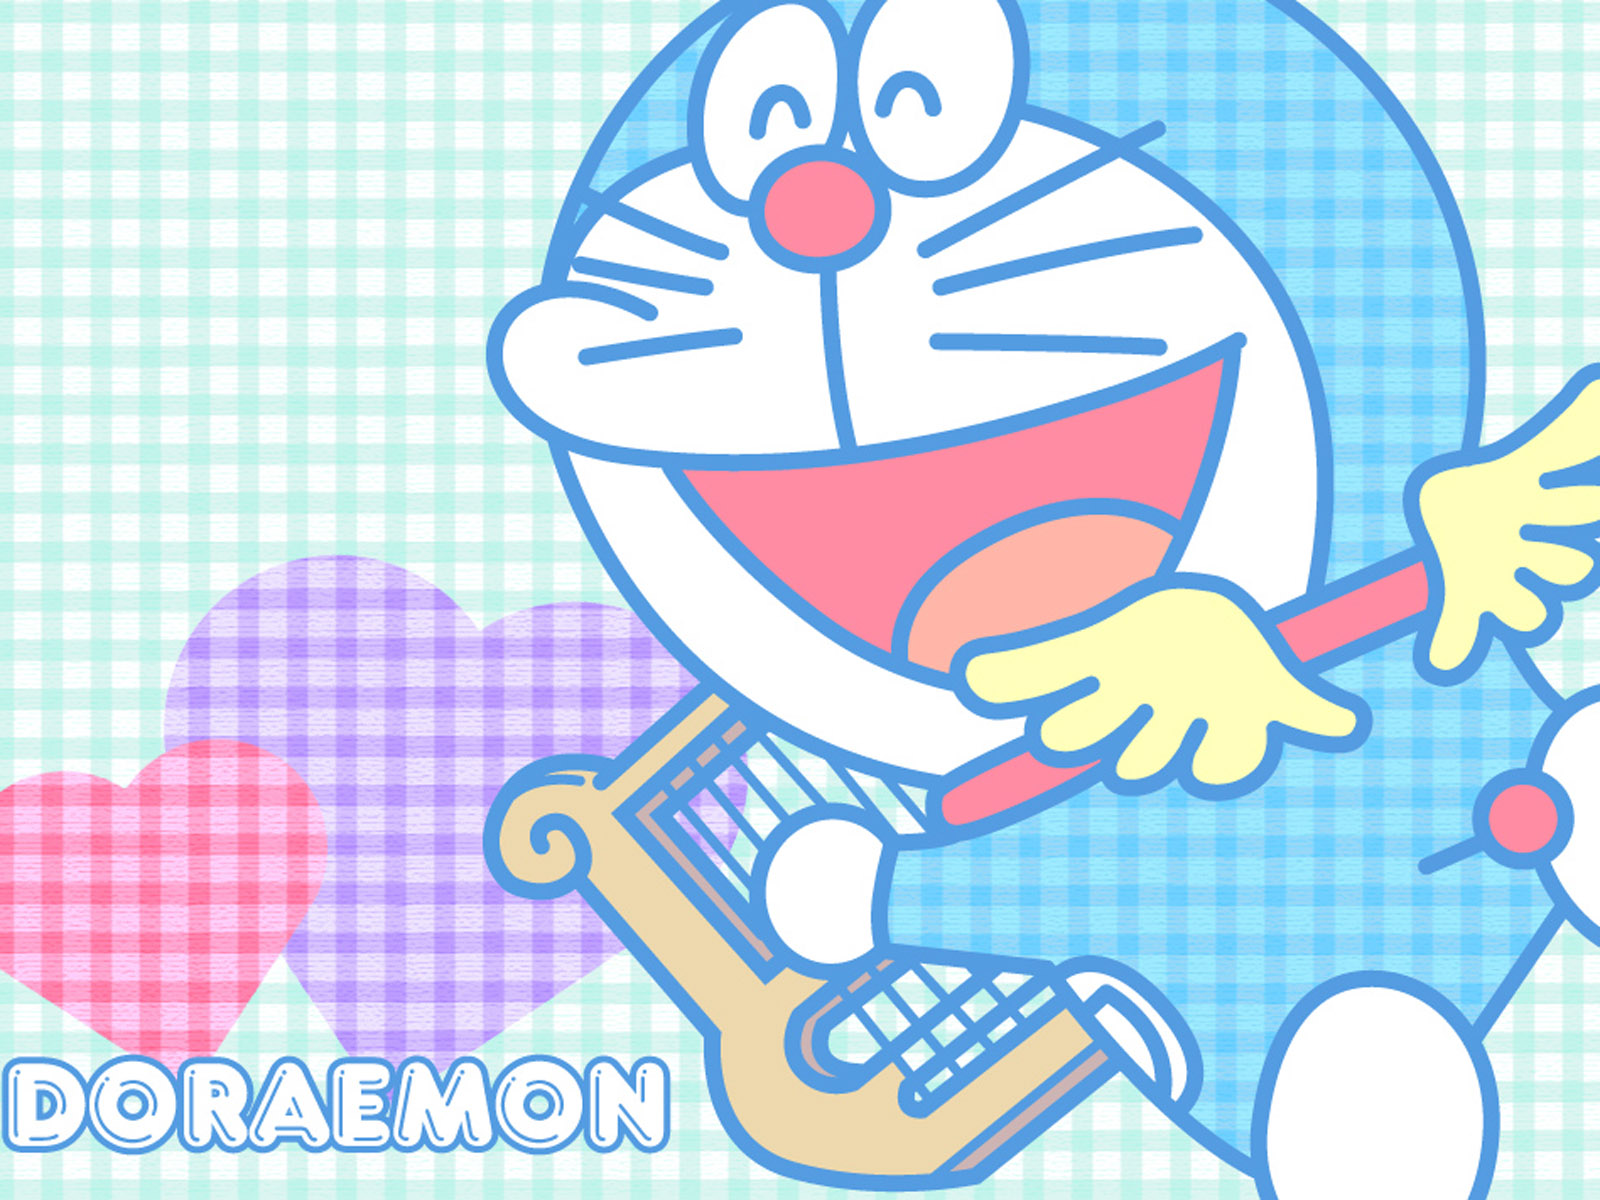 Foto Lucu Boneka Doraemon Terbaru Display Picture Unik